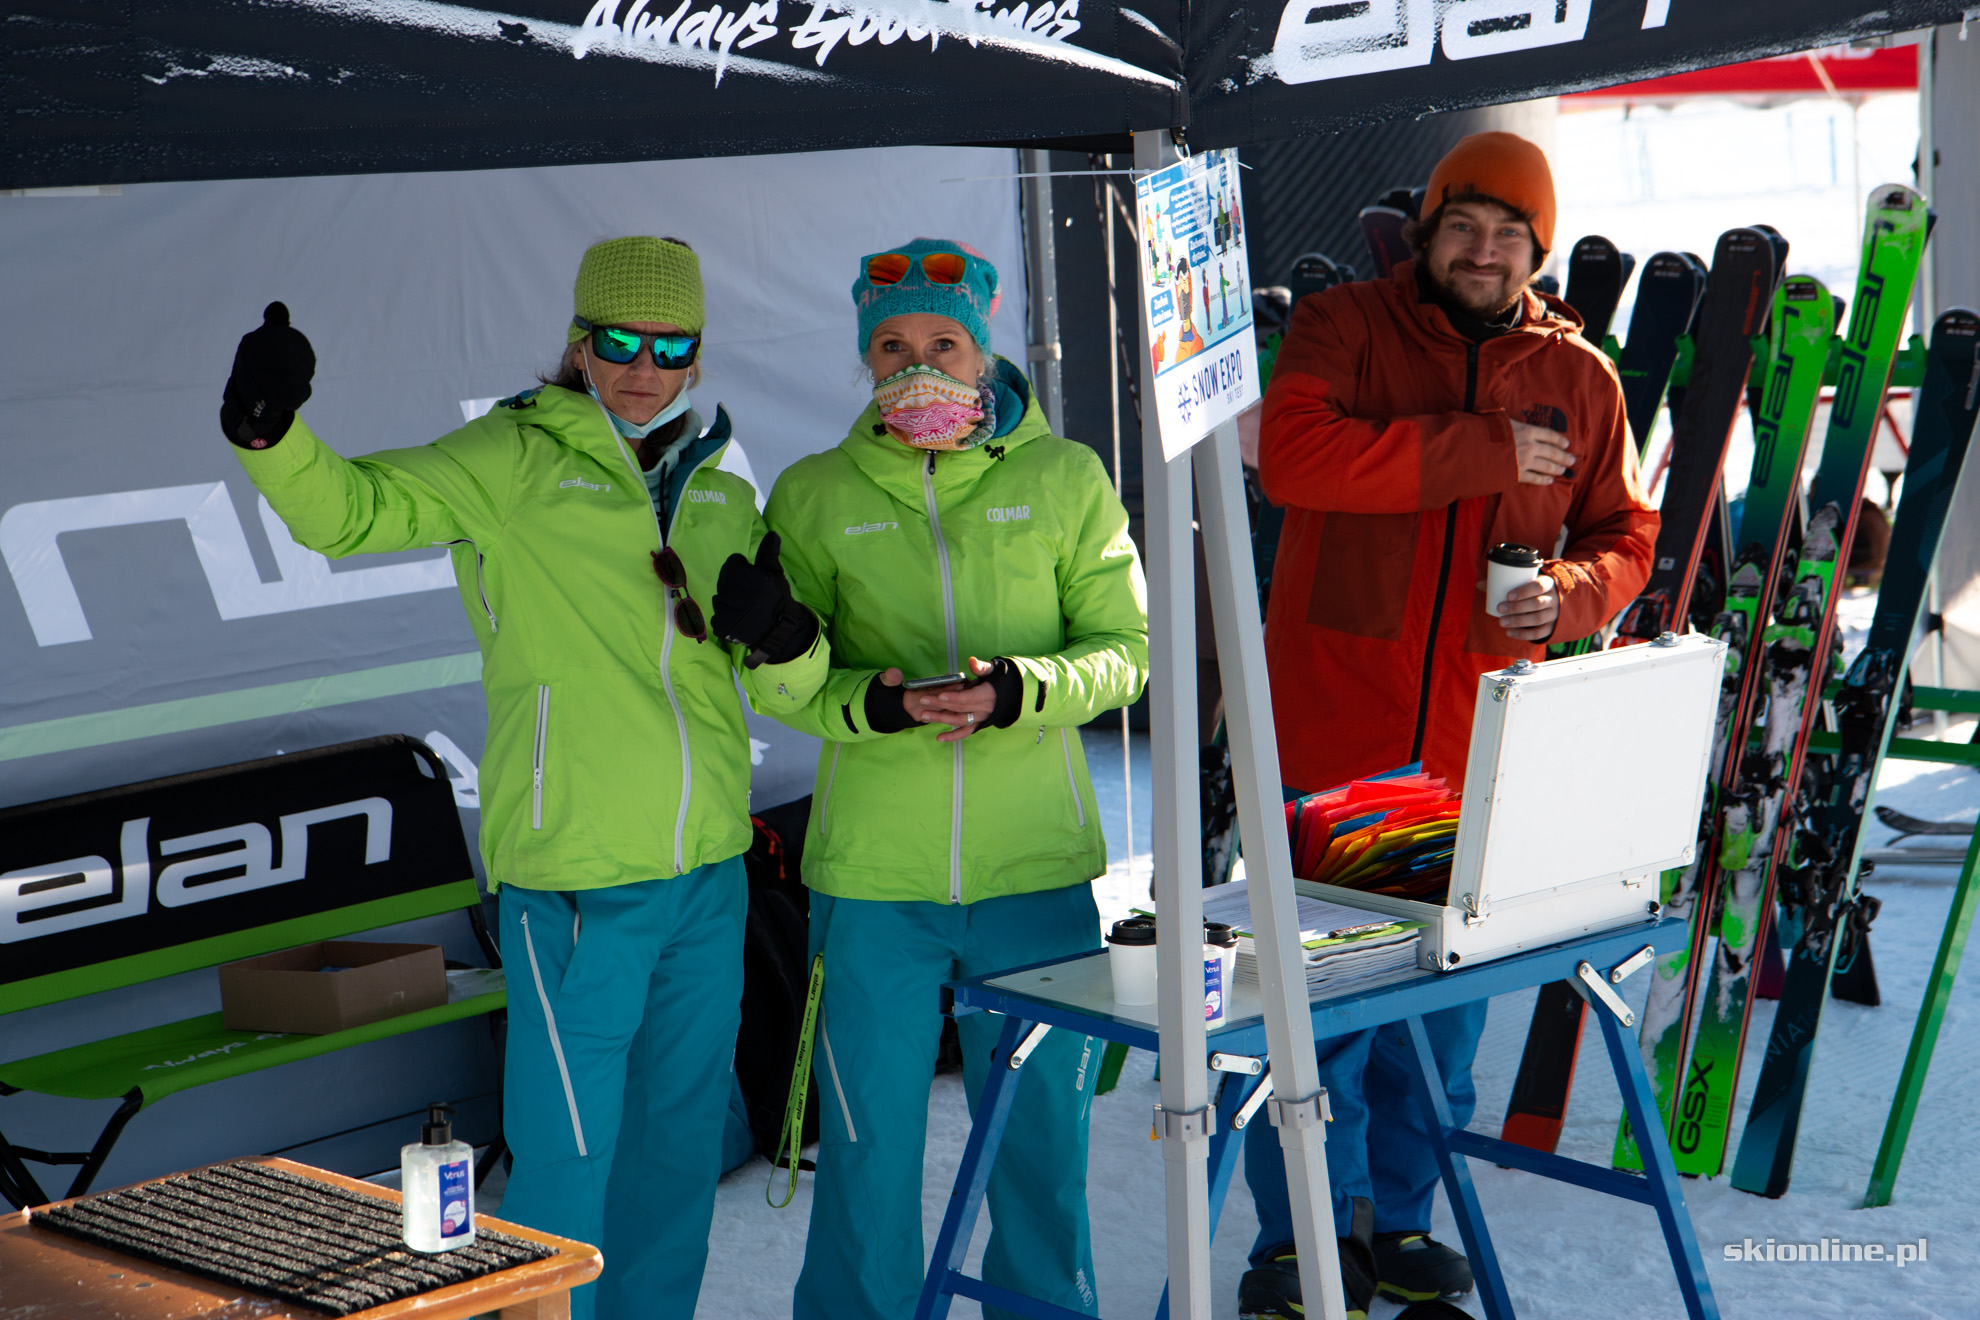 Galeria: Snow Expo Ski Test - Kotelnica Białczańska